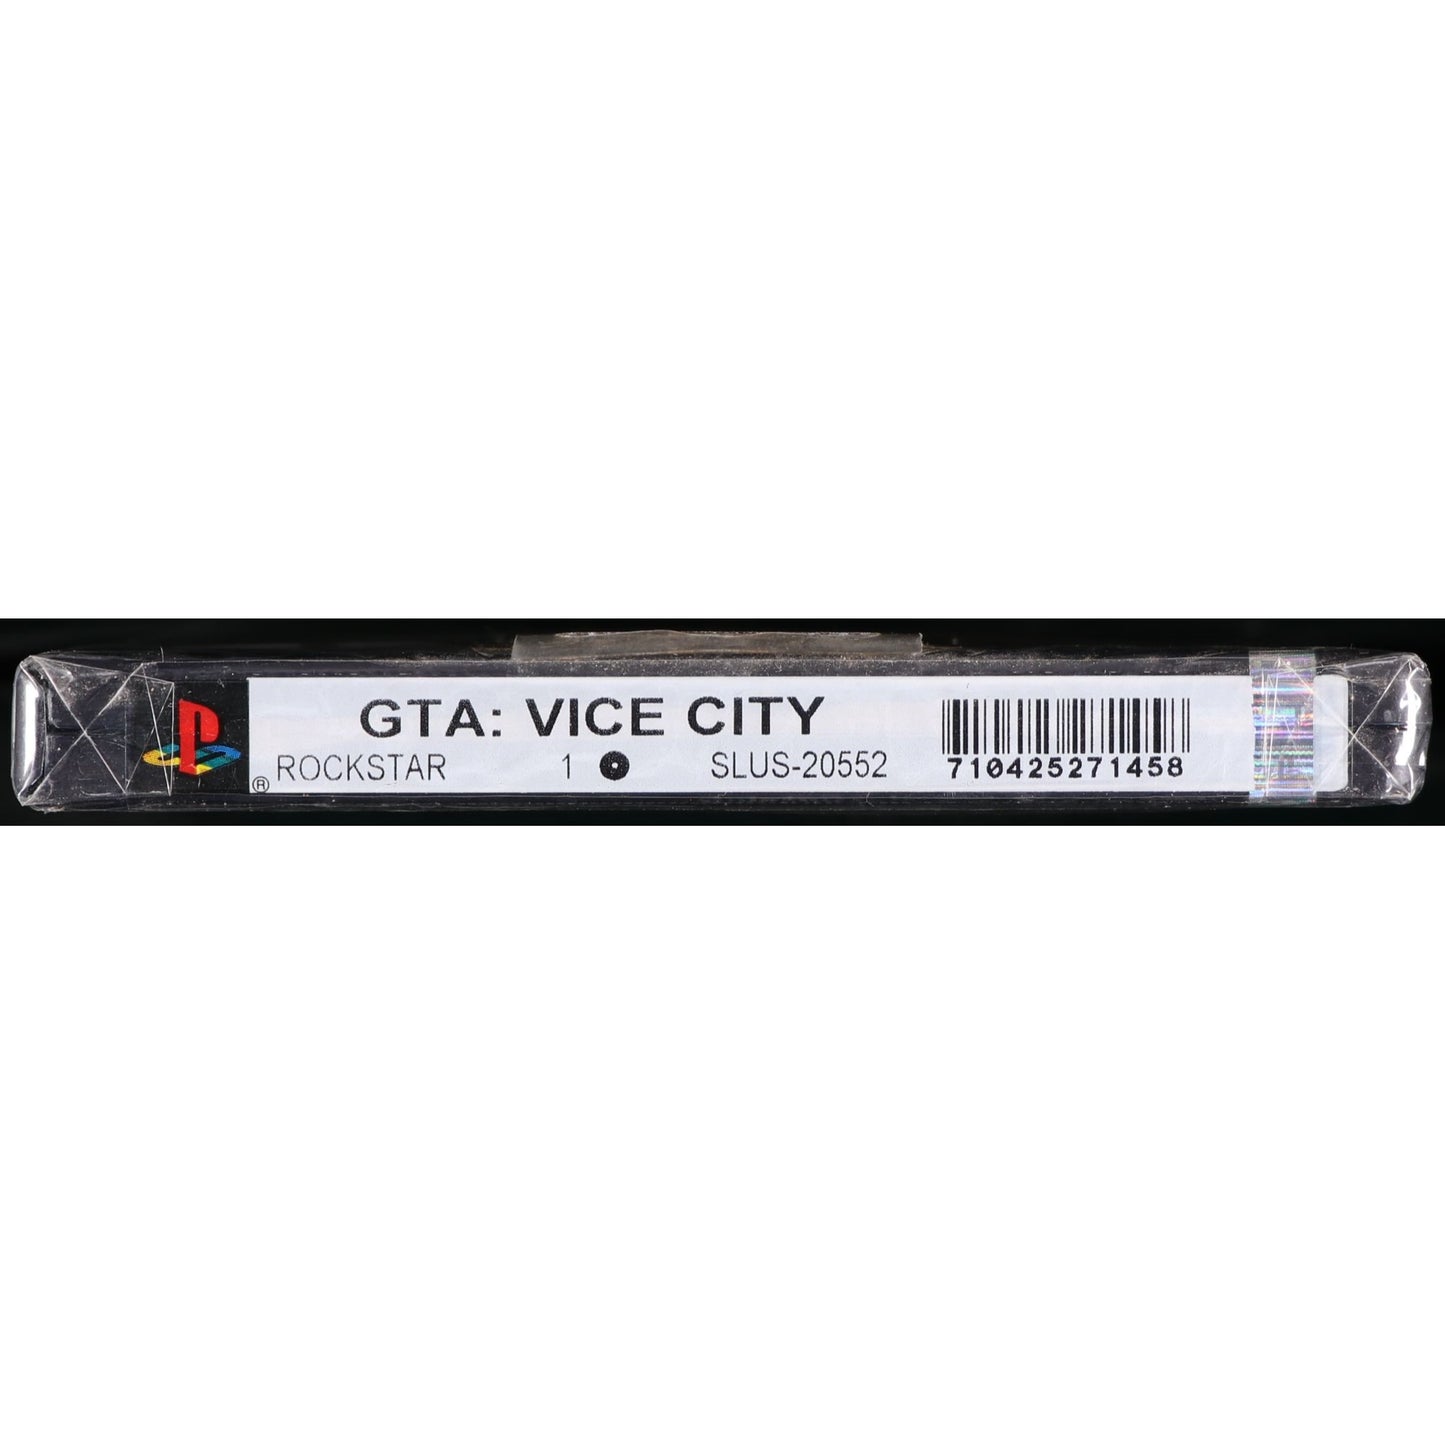 Grand Theft Auto: Vice City (2002) PlayStation 2 Rockstar WATA 9.4 Sealed A+